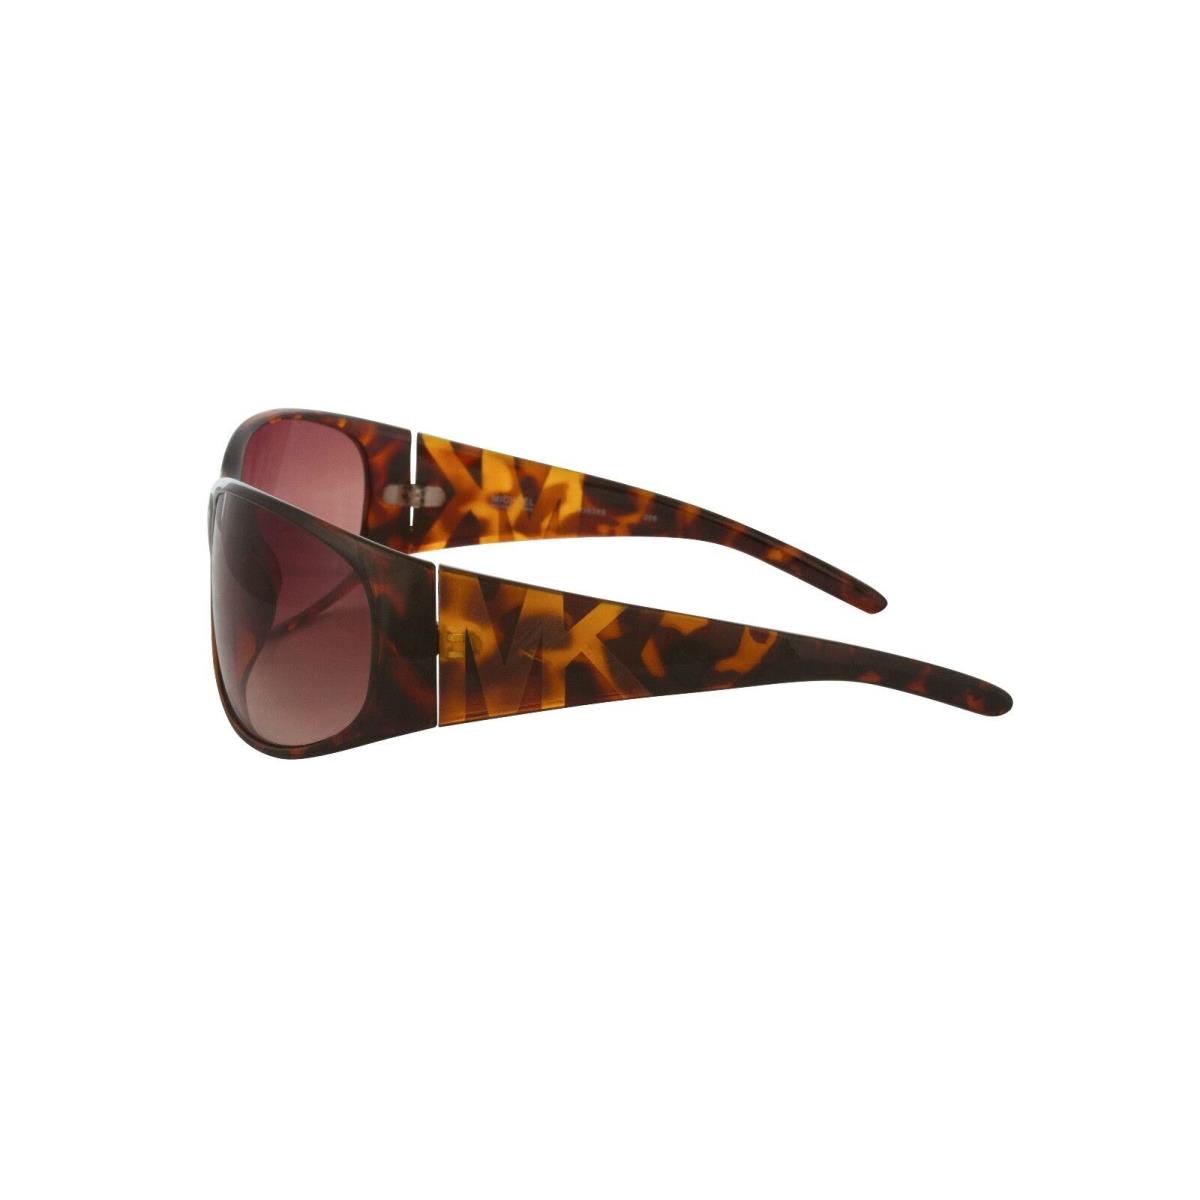 Michael Kors M 3605 S 206 Brown Sunglasses